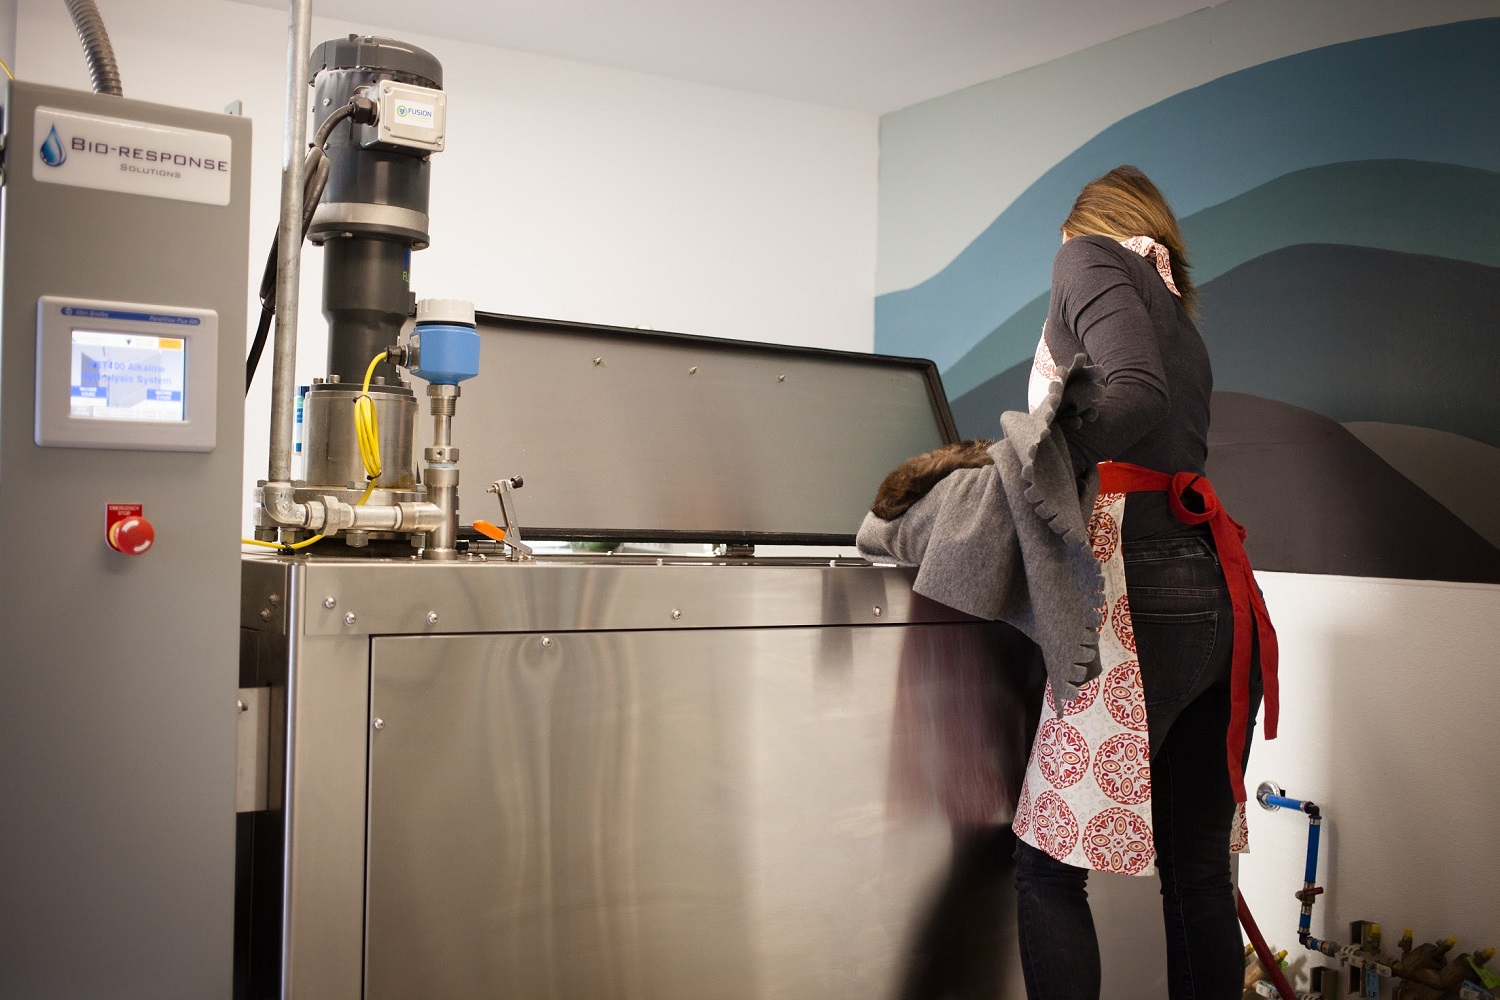 Bio-Response Solutions staff member puts pet remains into an alkaline hydrolysis machine